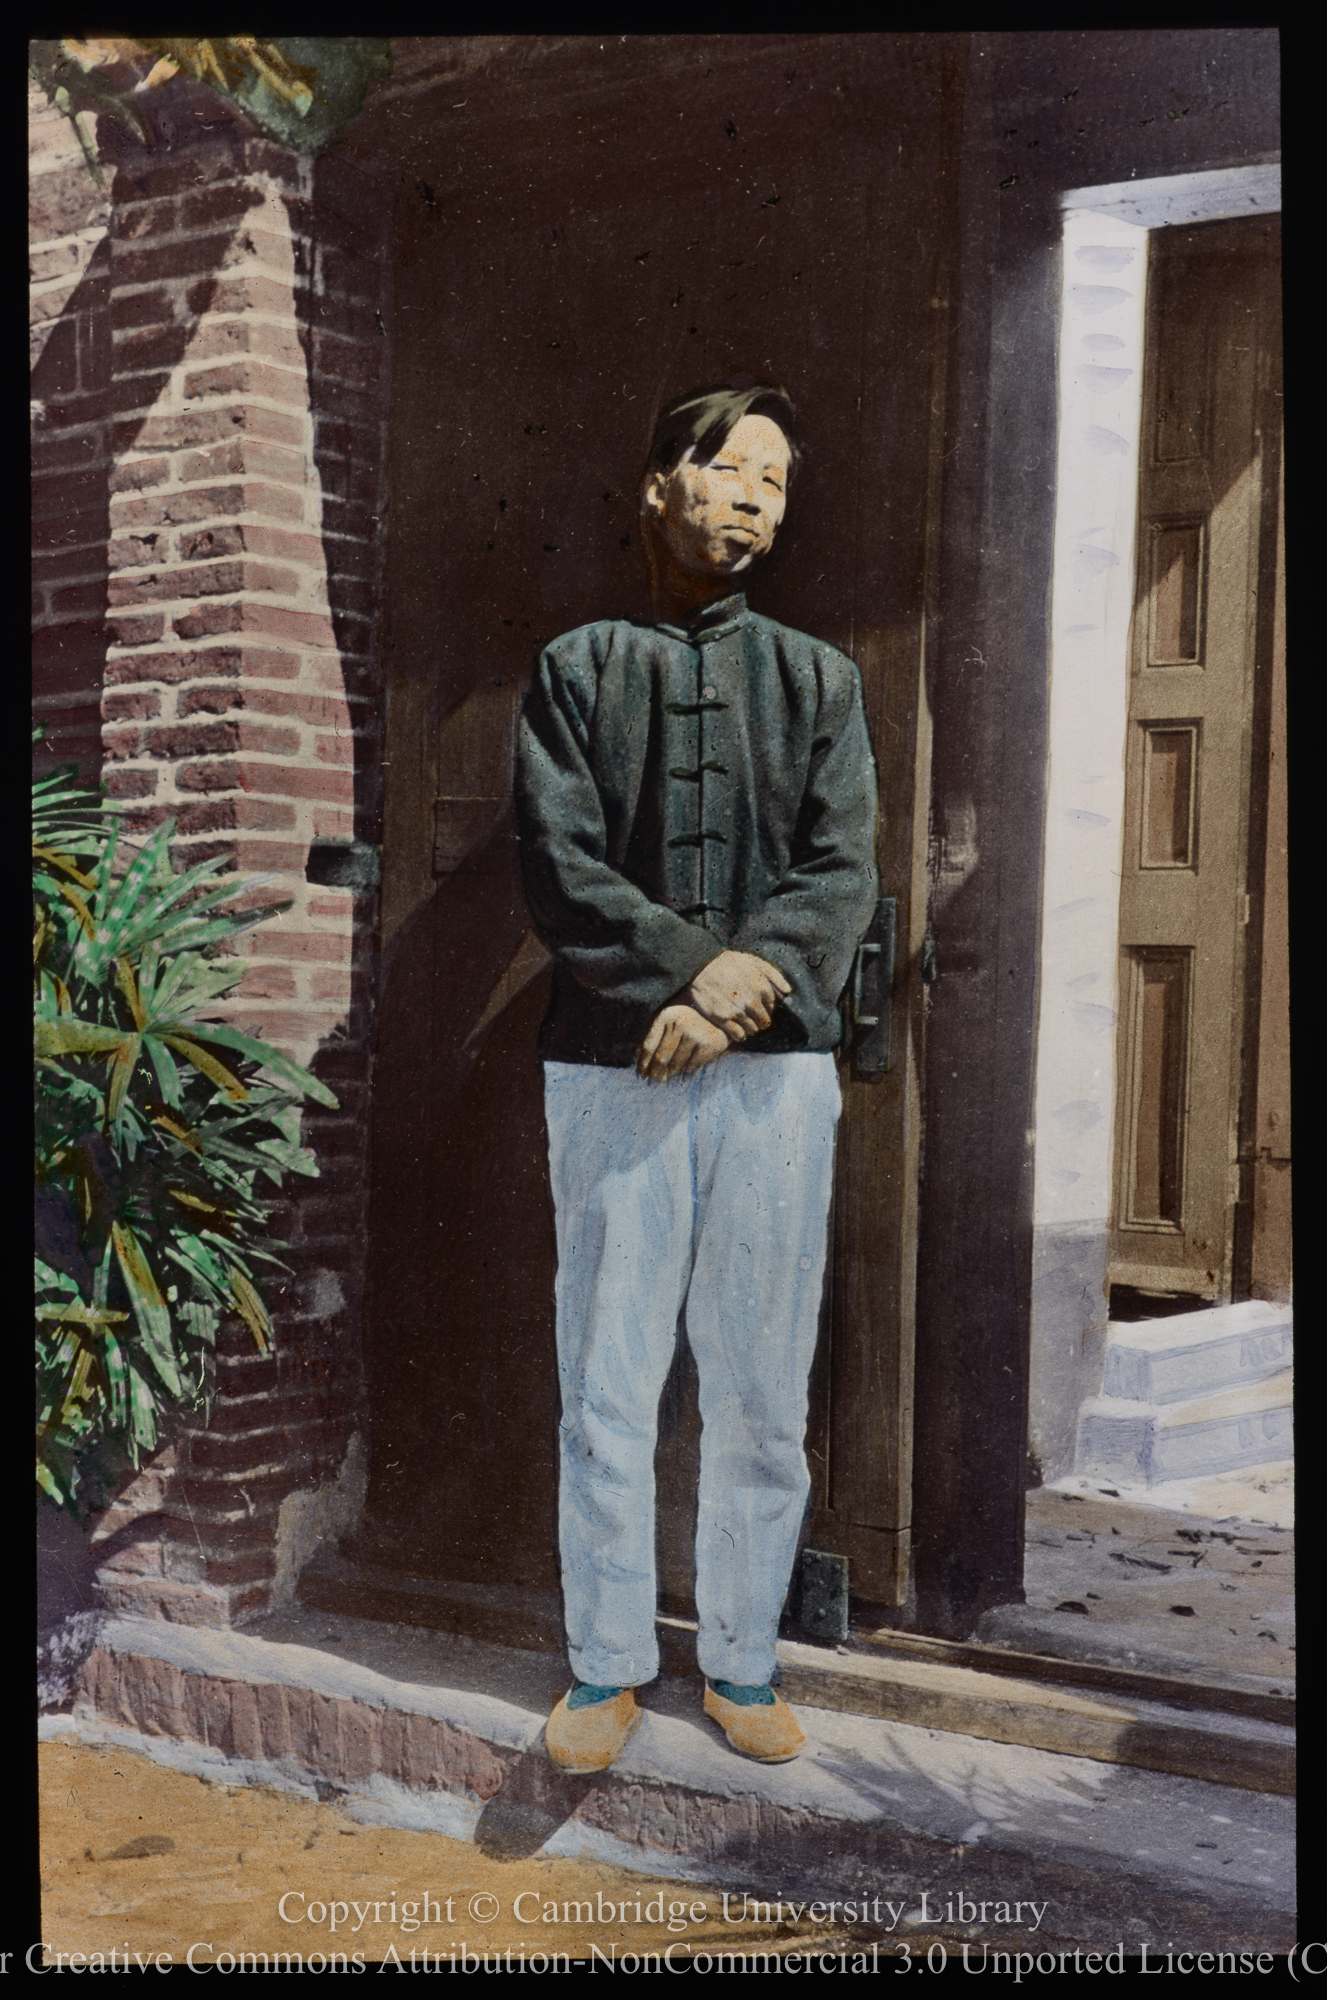 Jonas Lee at the Pakhoi [Beihai] Leprosy Hospital, 1890 - 1930